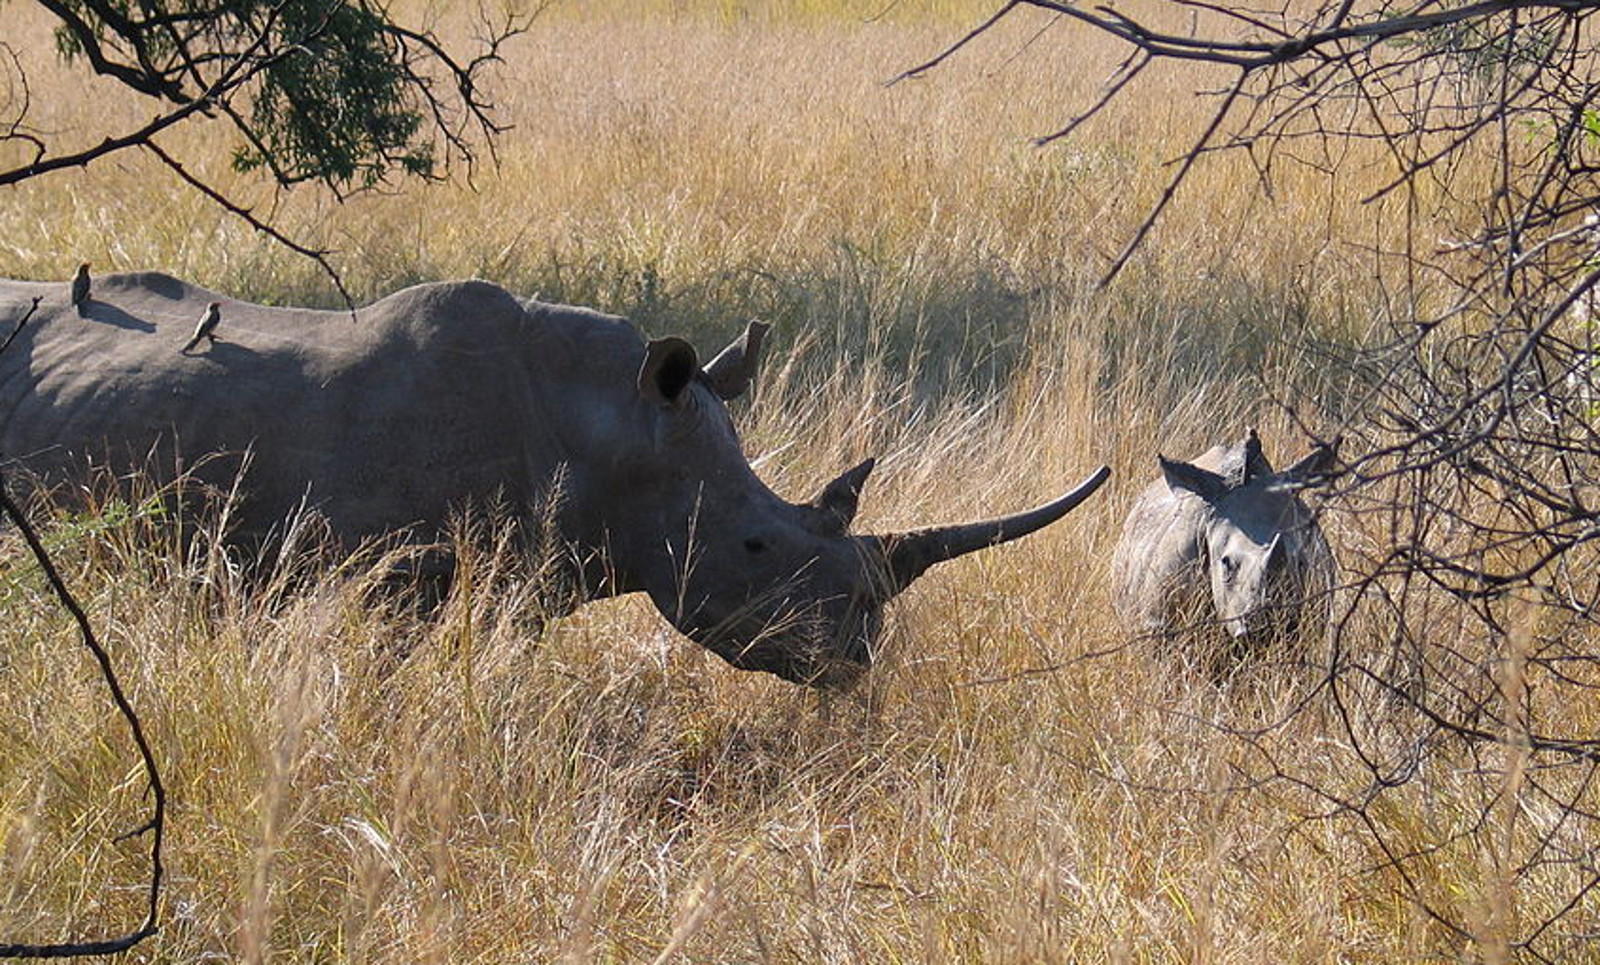 Legalizing Rhino horns